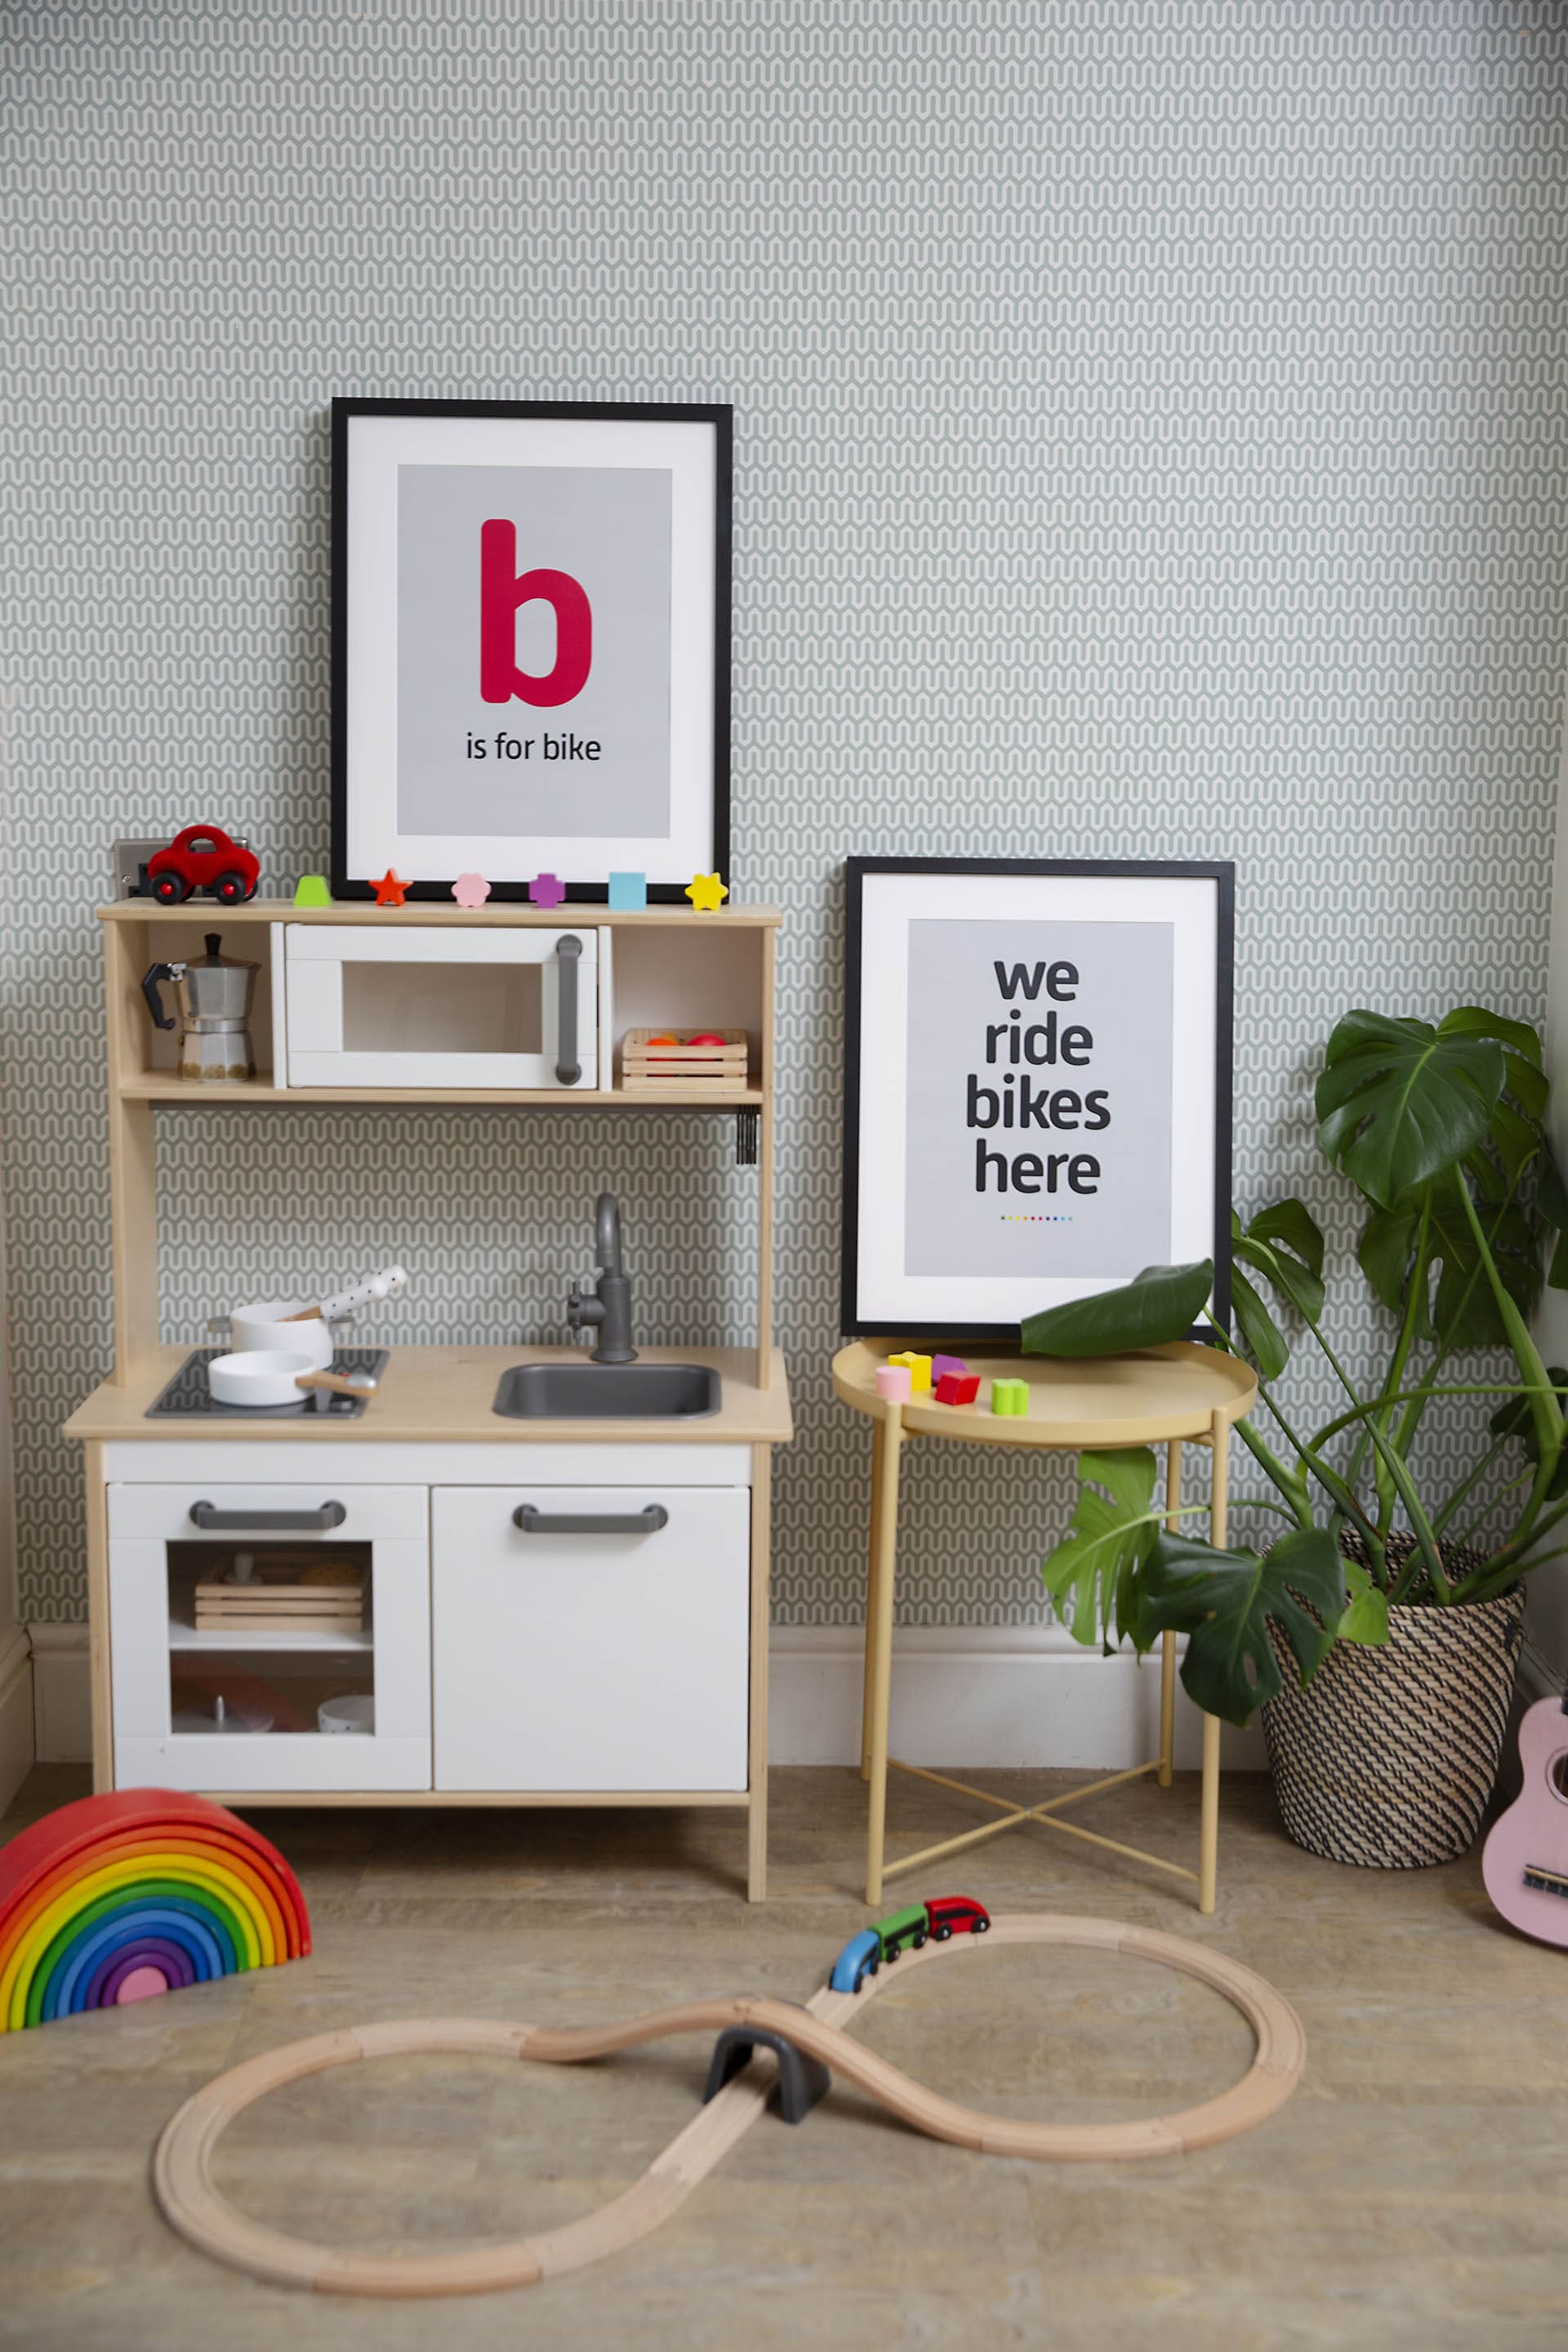 B is for Bike Art Print - TrailMaps.co.uk